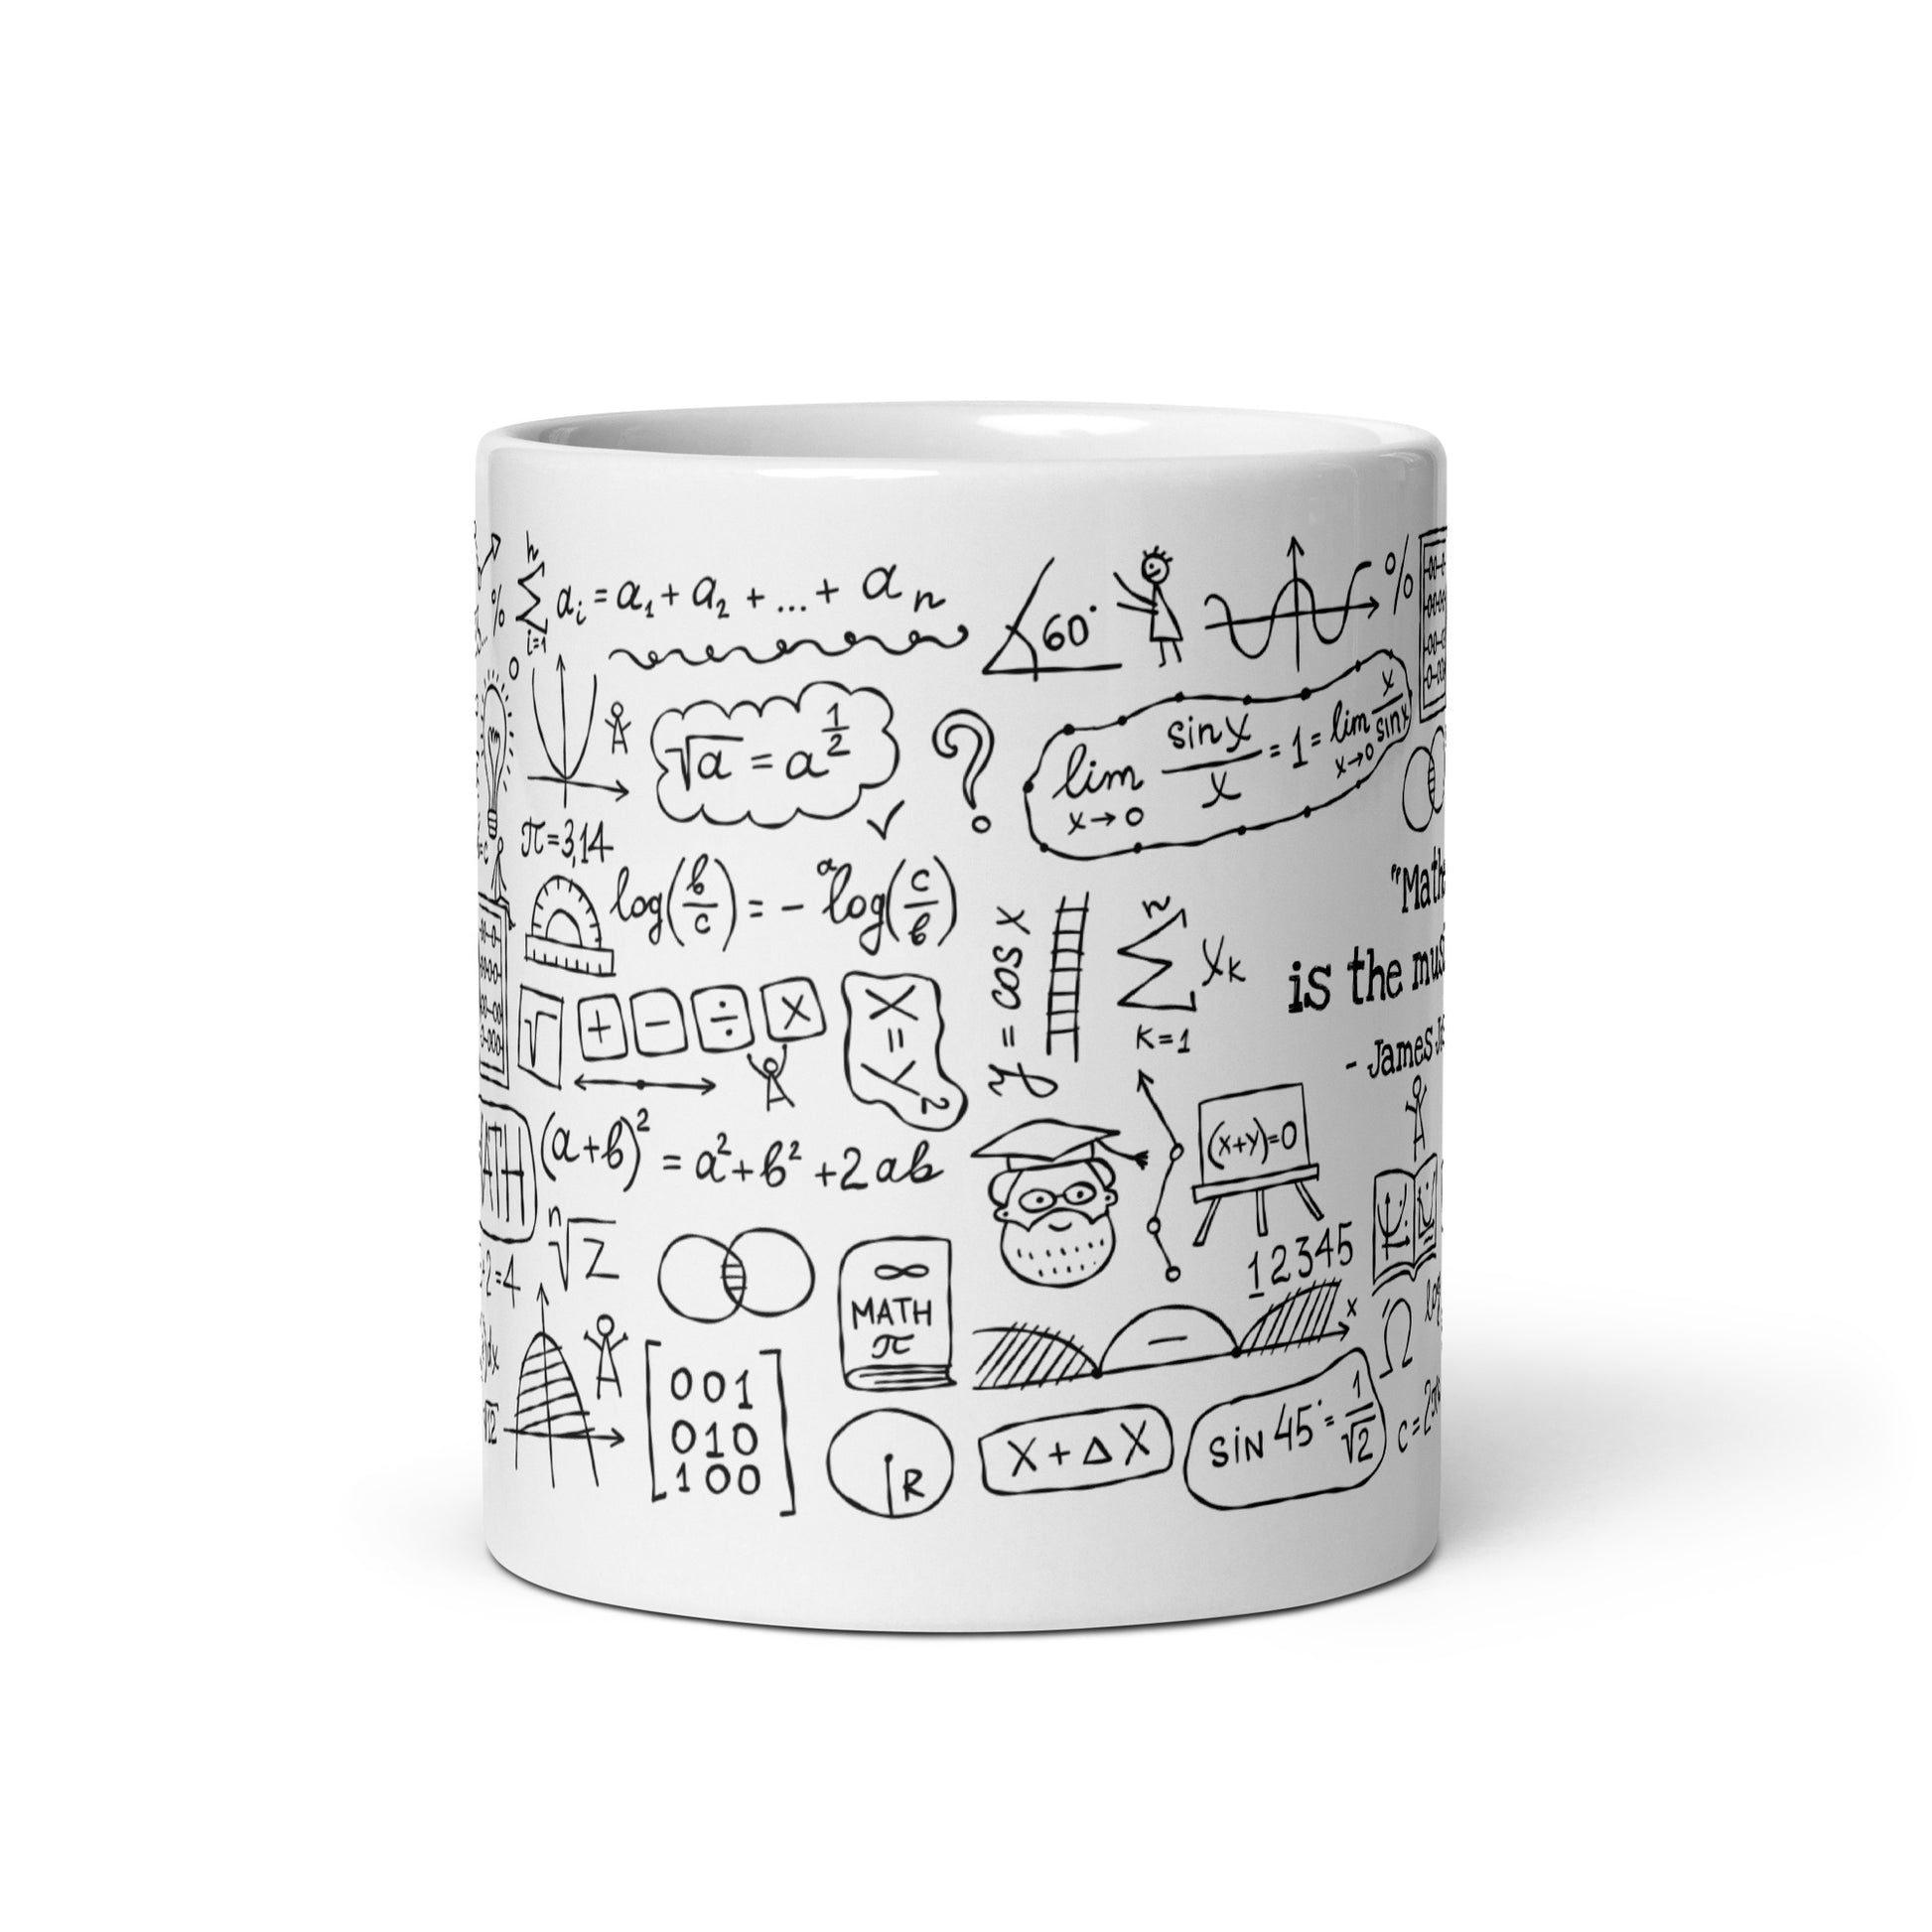 Mathematical Formulas and Symbols. Personalised Gift Mug for Teachers, Students, and STEM Enthusiasts kudrylab